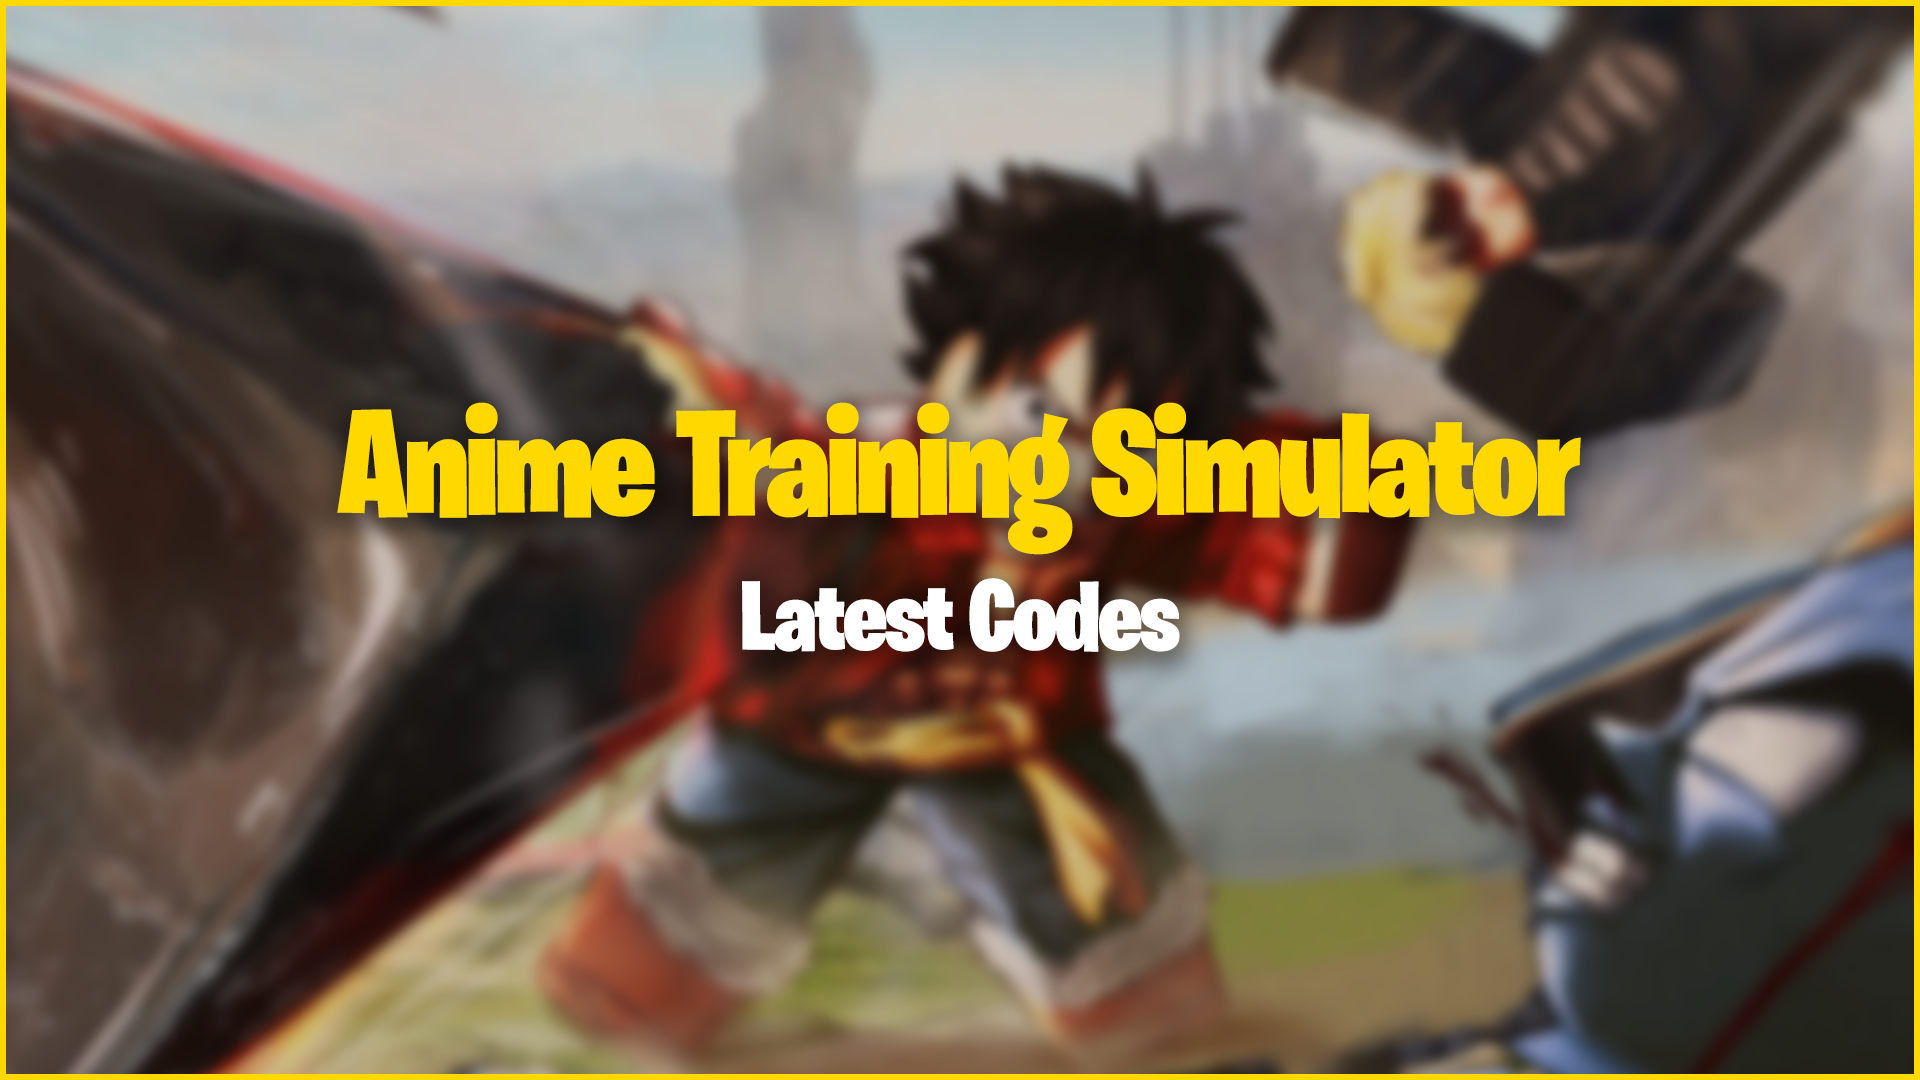 Anime Training Simulator codes – free yen